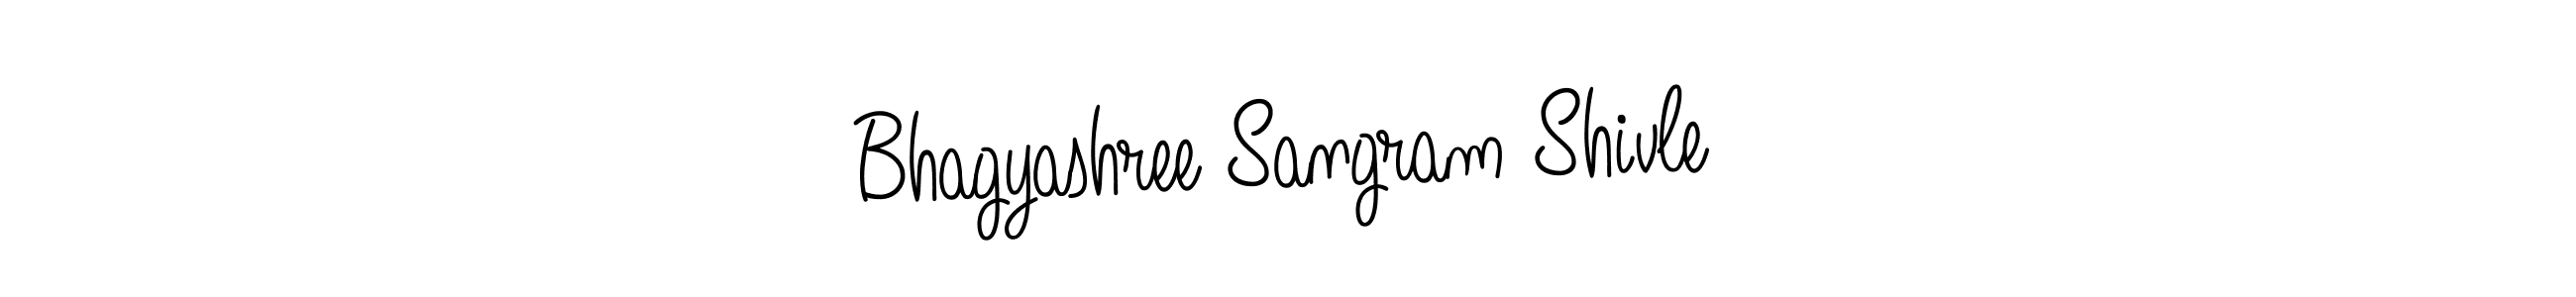 Best and Professional Signature Style for Bhagyashree Sangram Shivle. Angelique-Rose-font-FFP Best Signature Style Collection. Bhagyashree Sangram Shivle signature style 5 images and pictures png